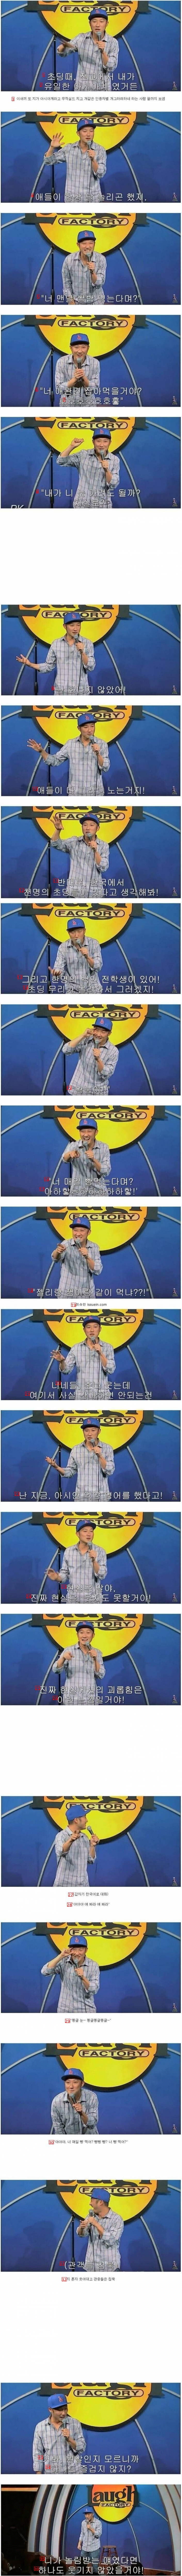 Korean Comedian Silences Western Spectators